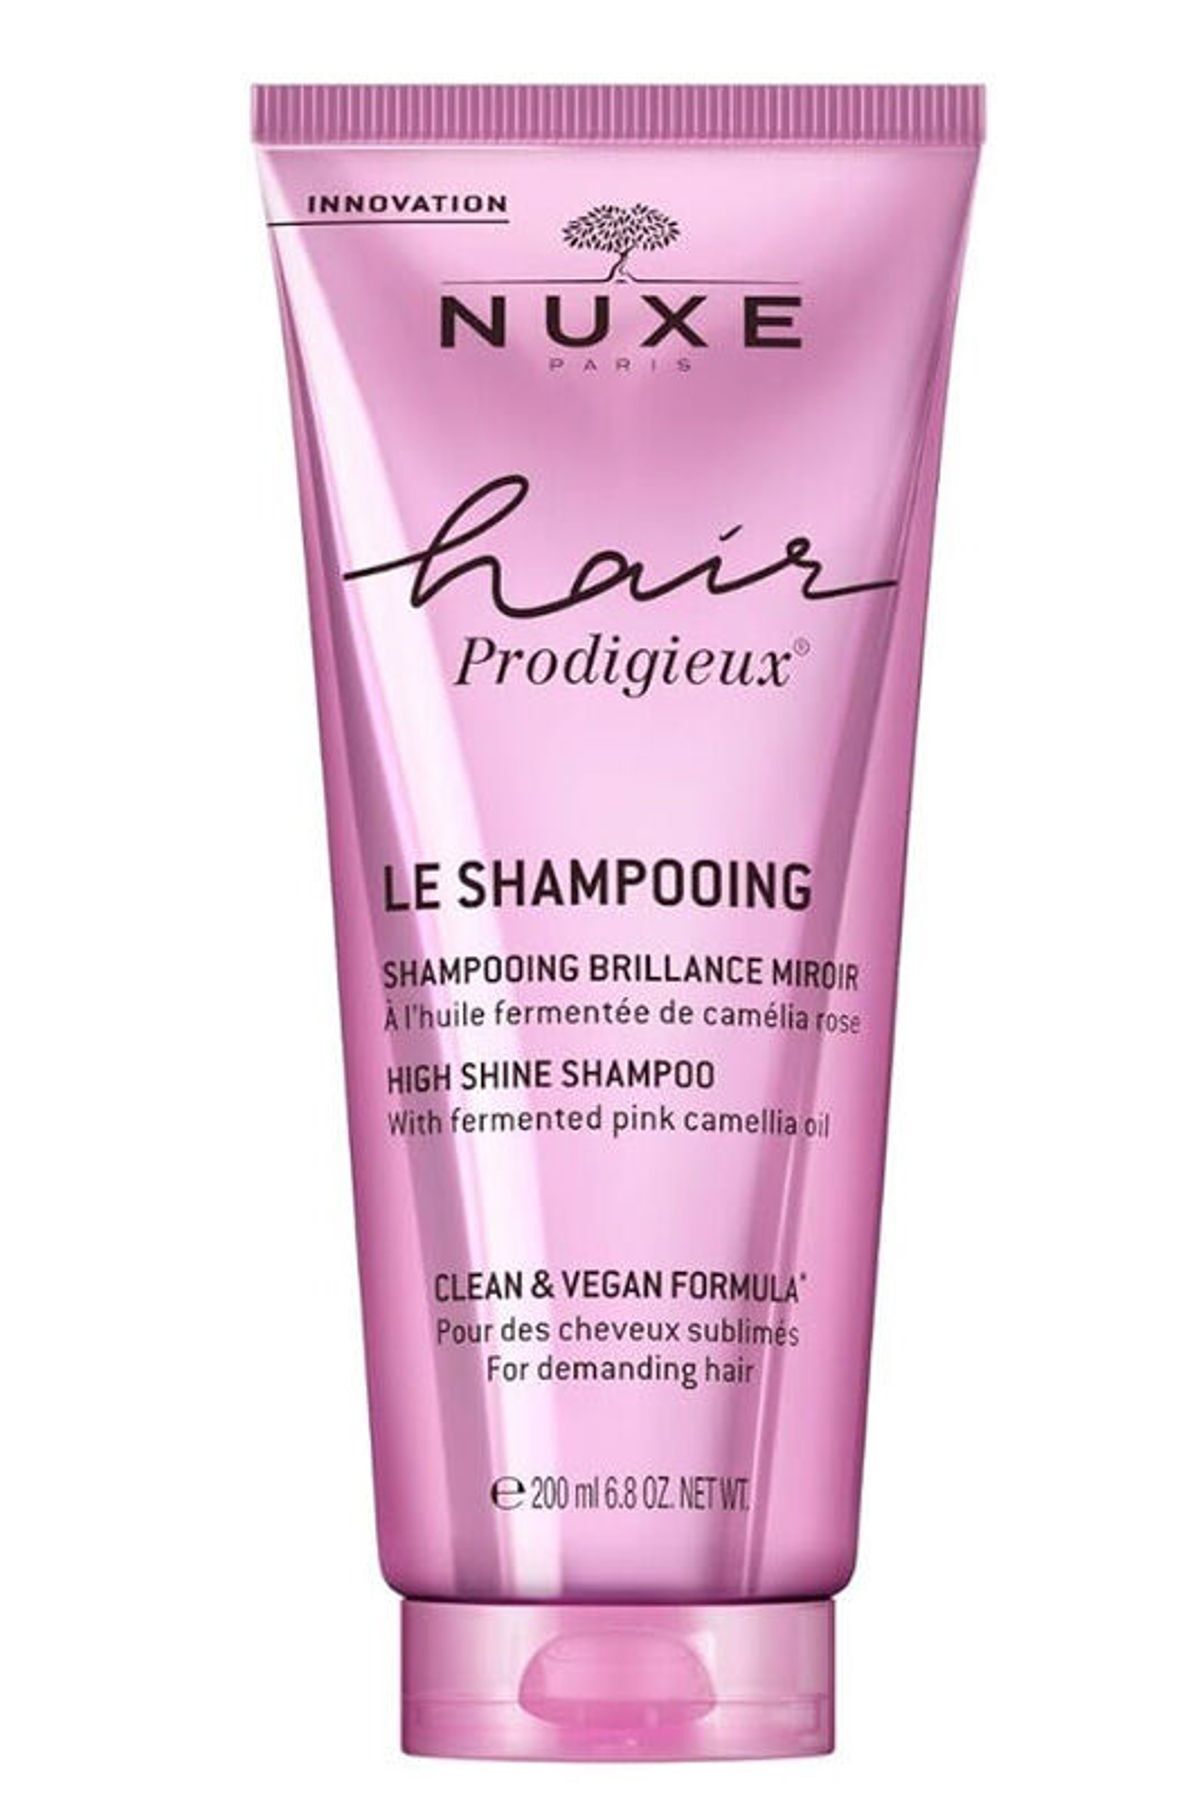 Nuxe Hair Prodigieux High Shine Shampoo 200 ml